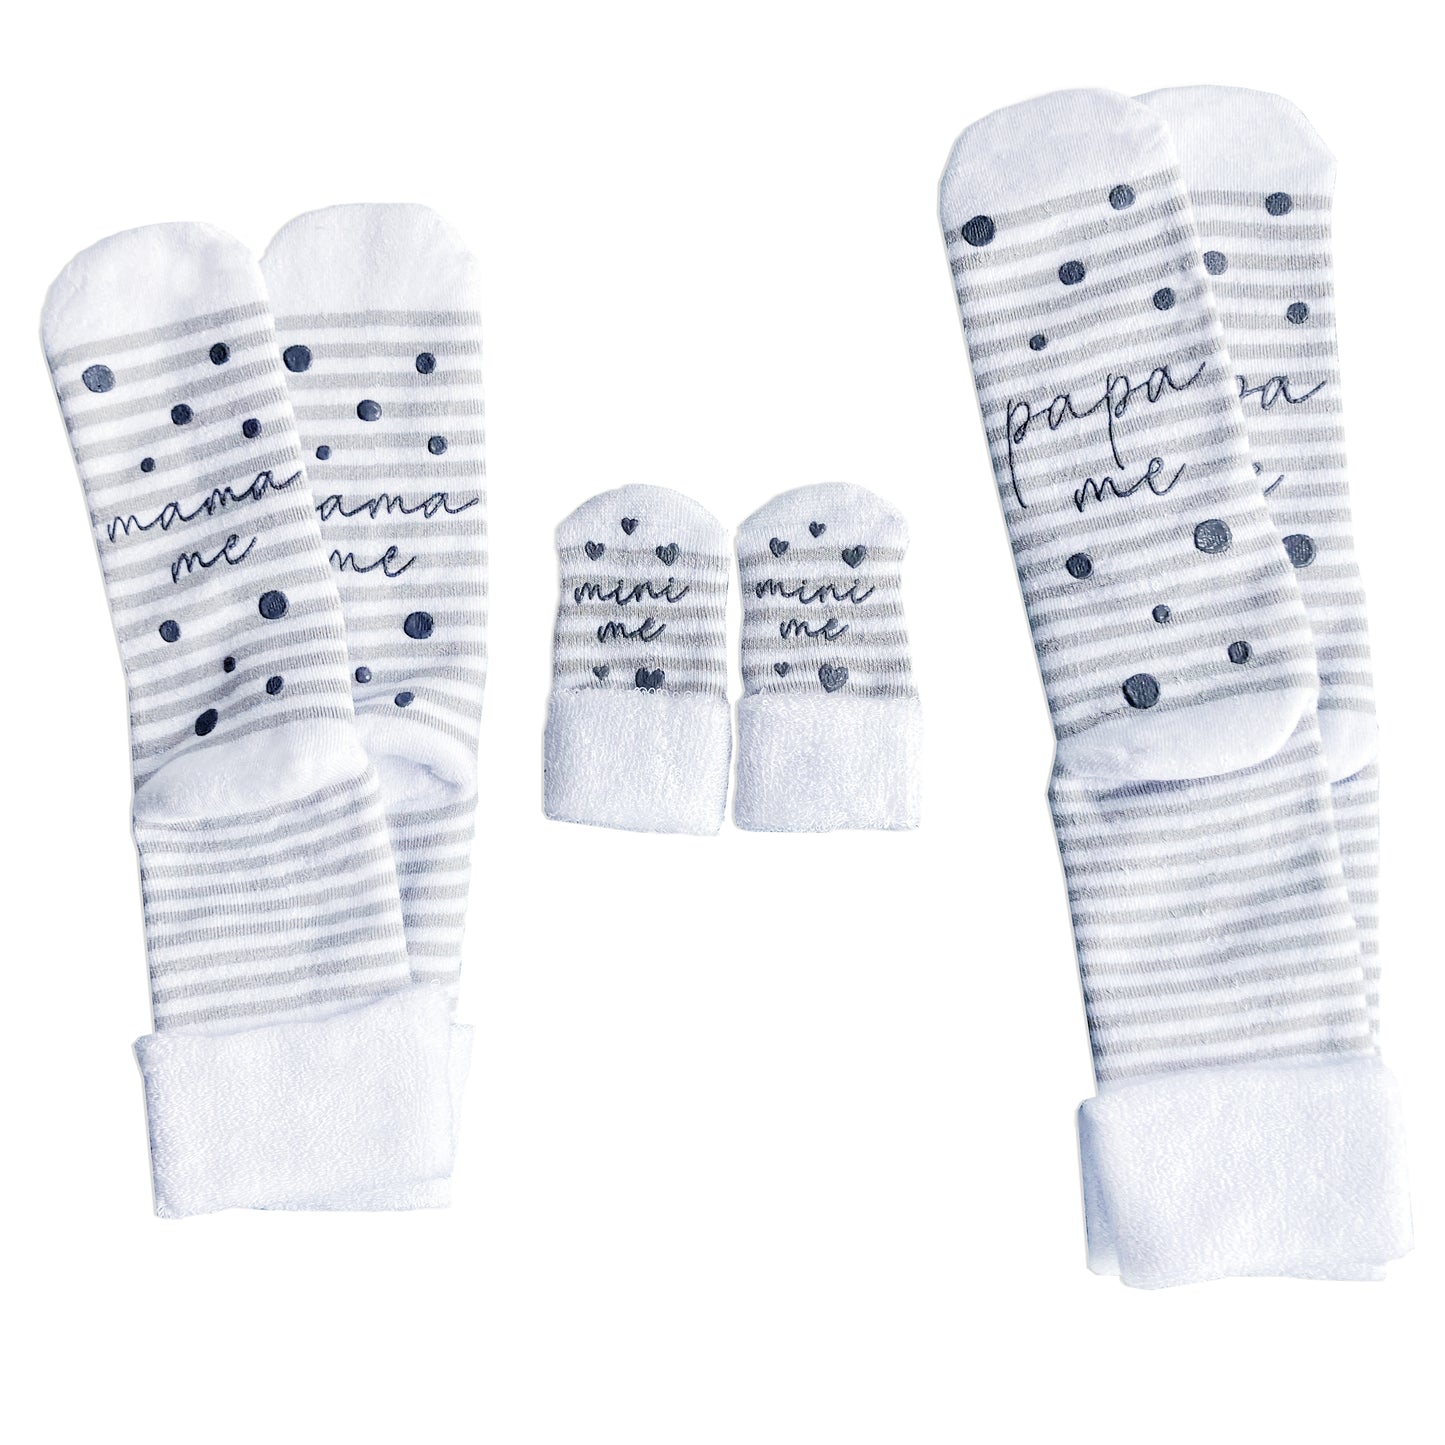 Bambus-Socken für Mama, Papa und Baby - "Mama me & Papa me & Mini me" - 3er Partnerlook-Socken-Set